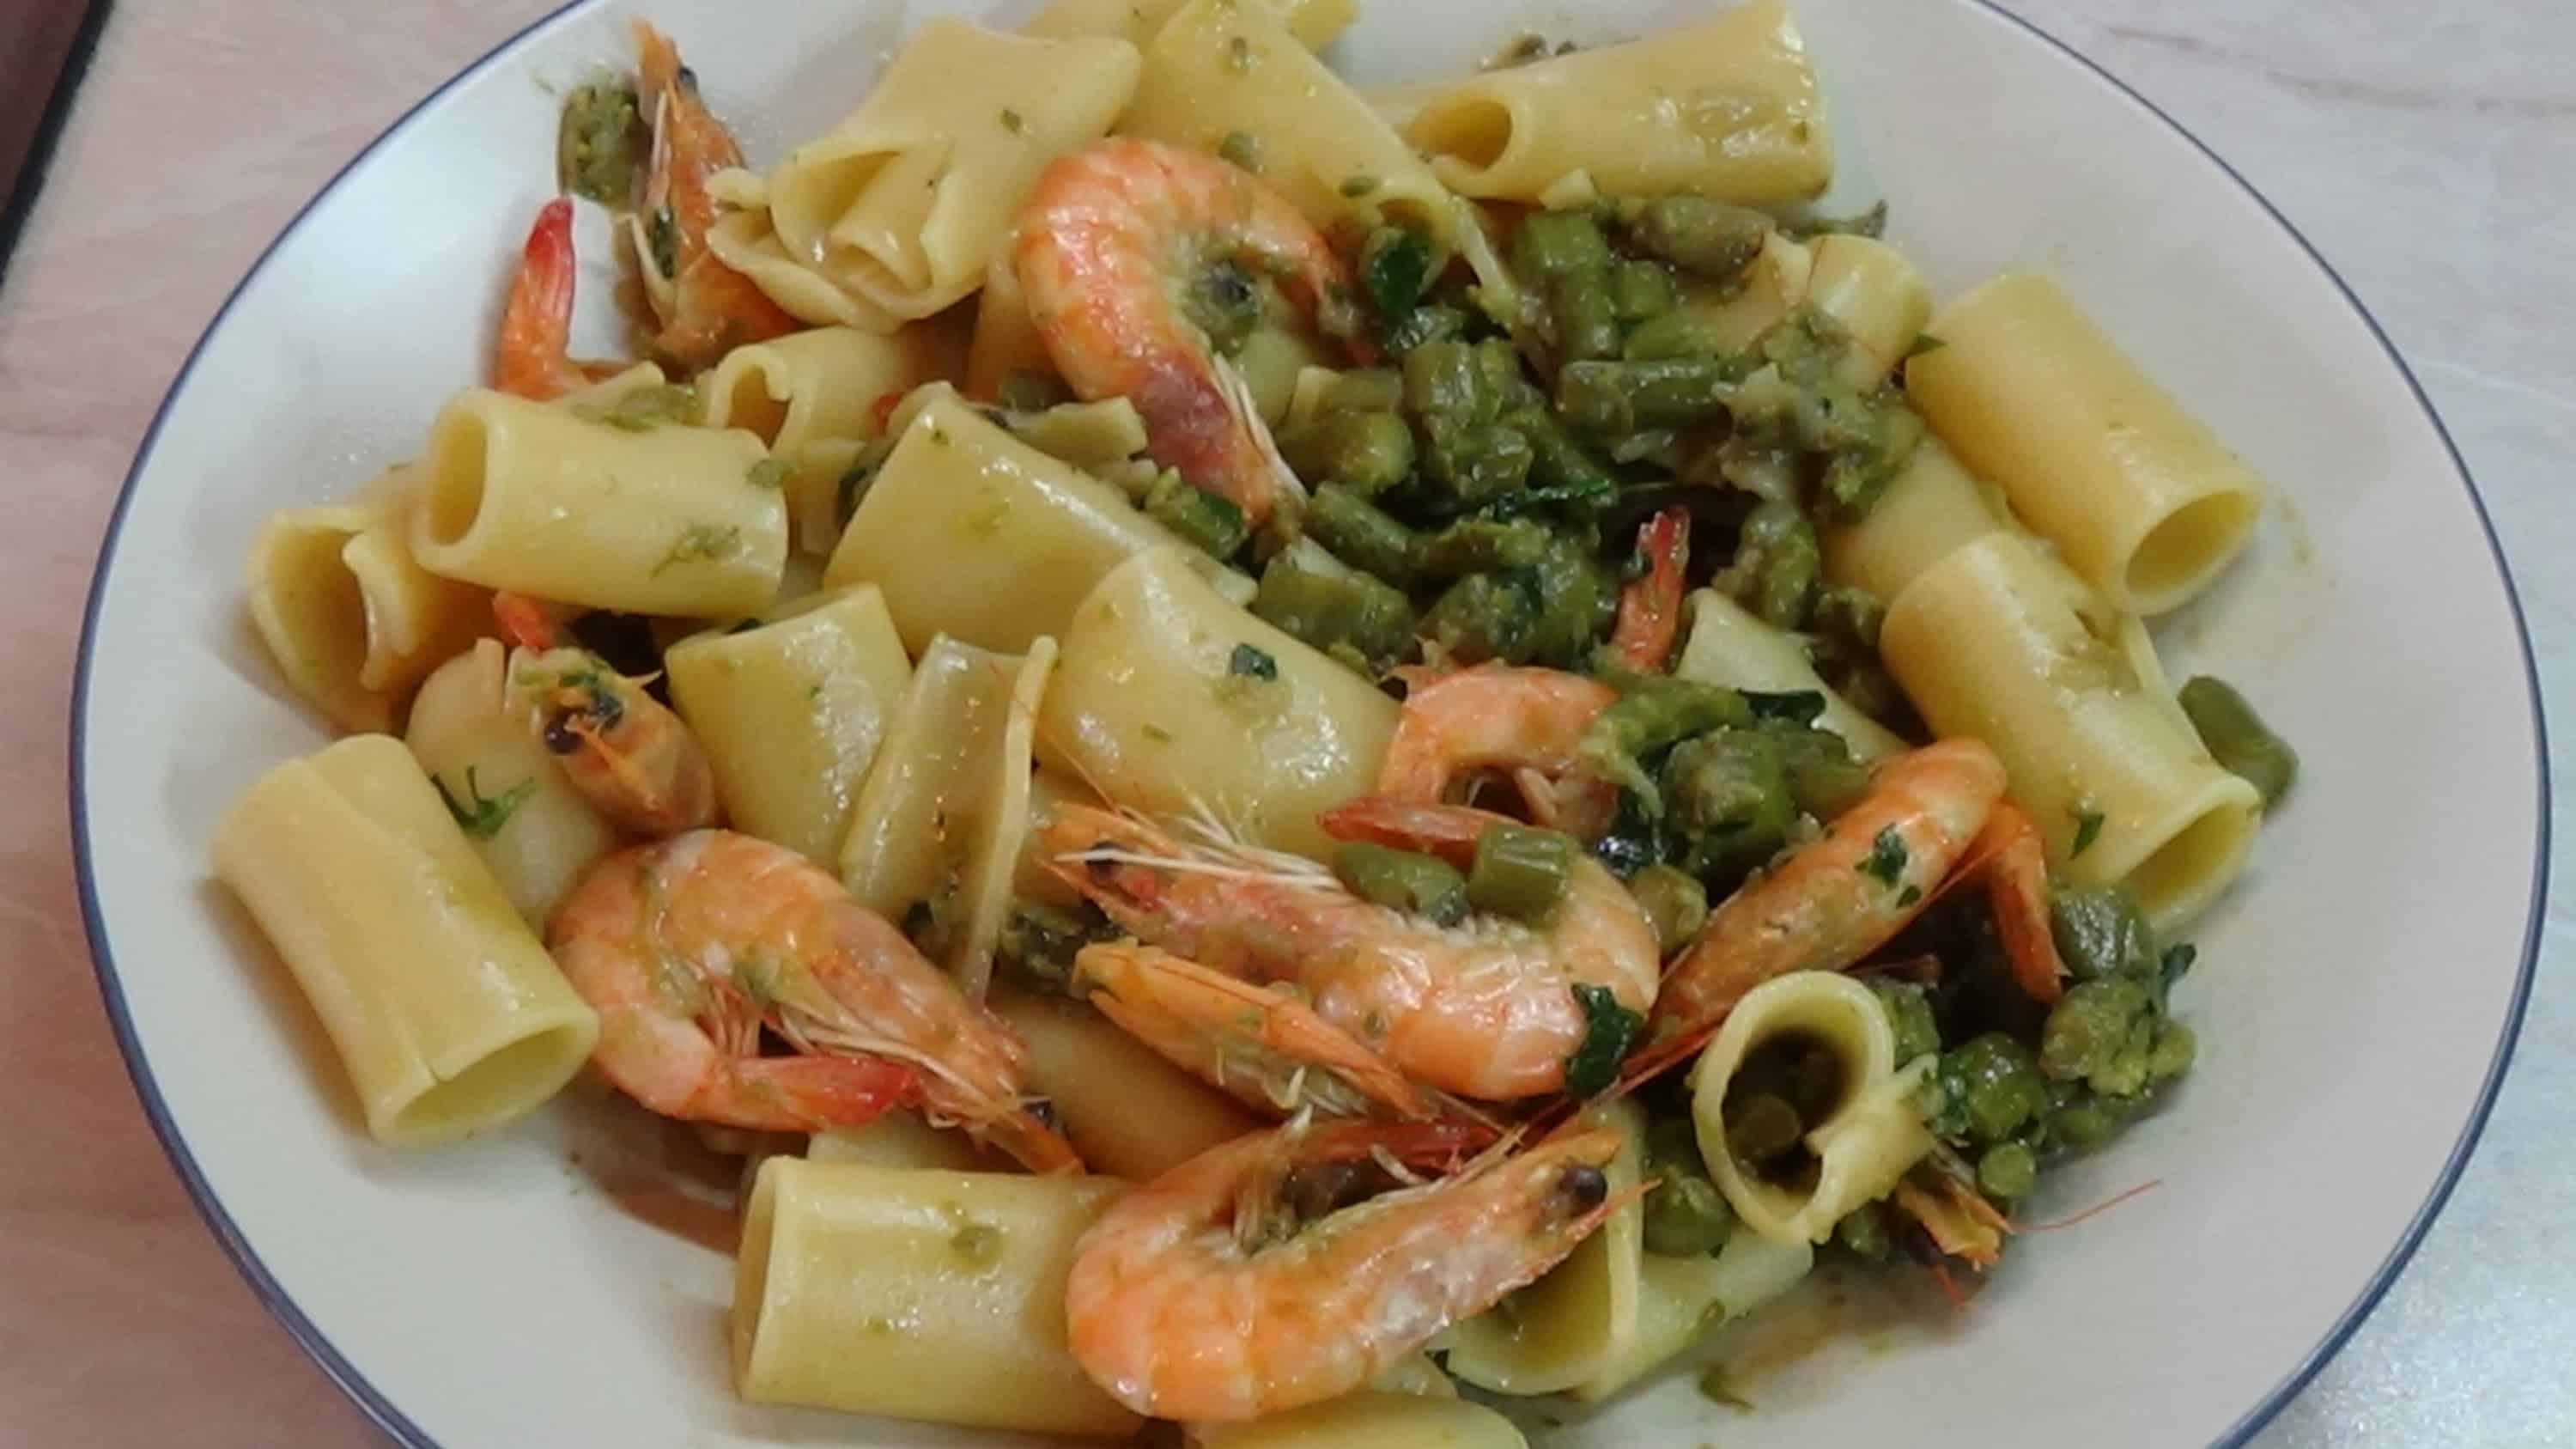 Rigatoni with shrimp and asparagus